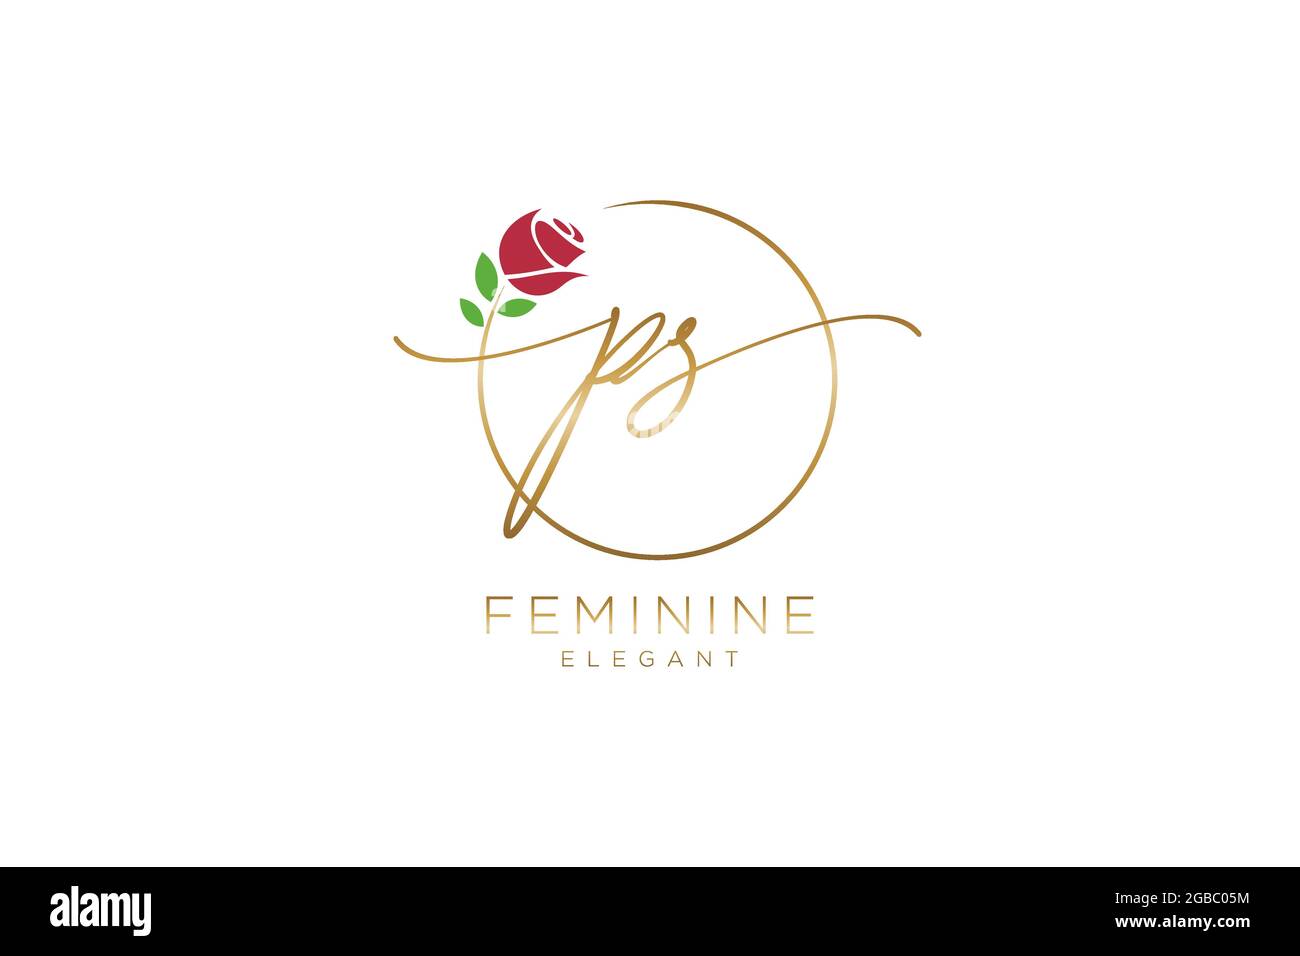 PS Feminine logo beauty monogram and elegant logo design, handwriting logo of initial signature, wedding, fashion, floral and botanical with creative Stock Vector